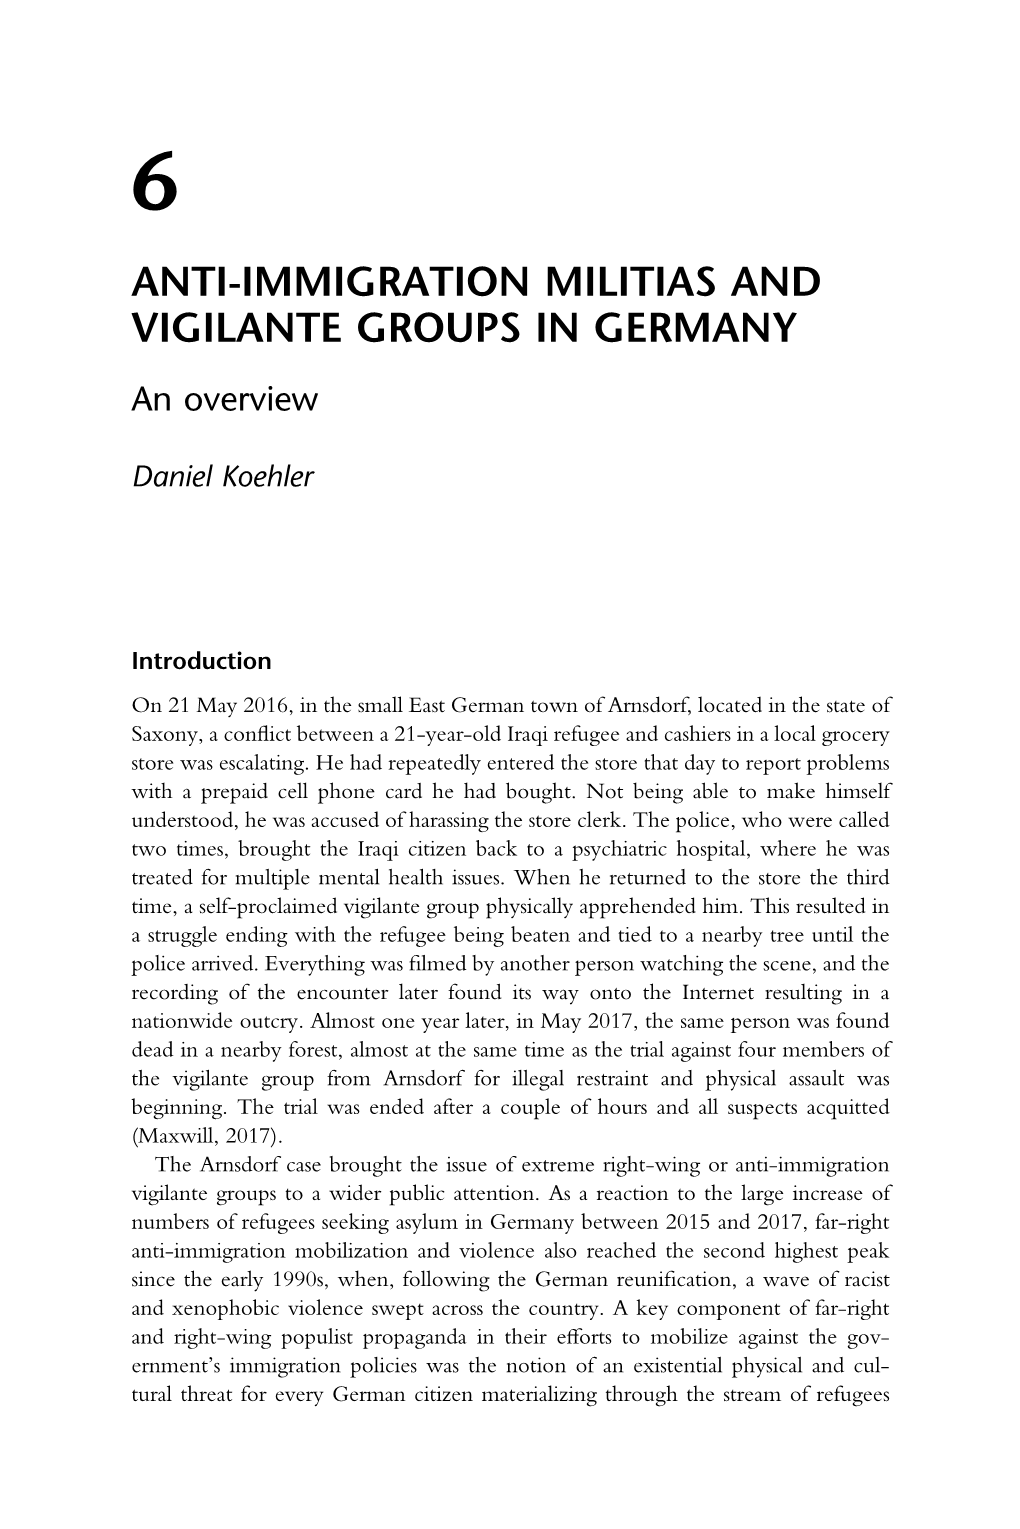 Vigilantism Against Migrants and Minorities; First Edition